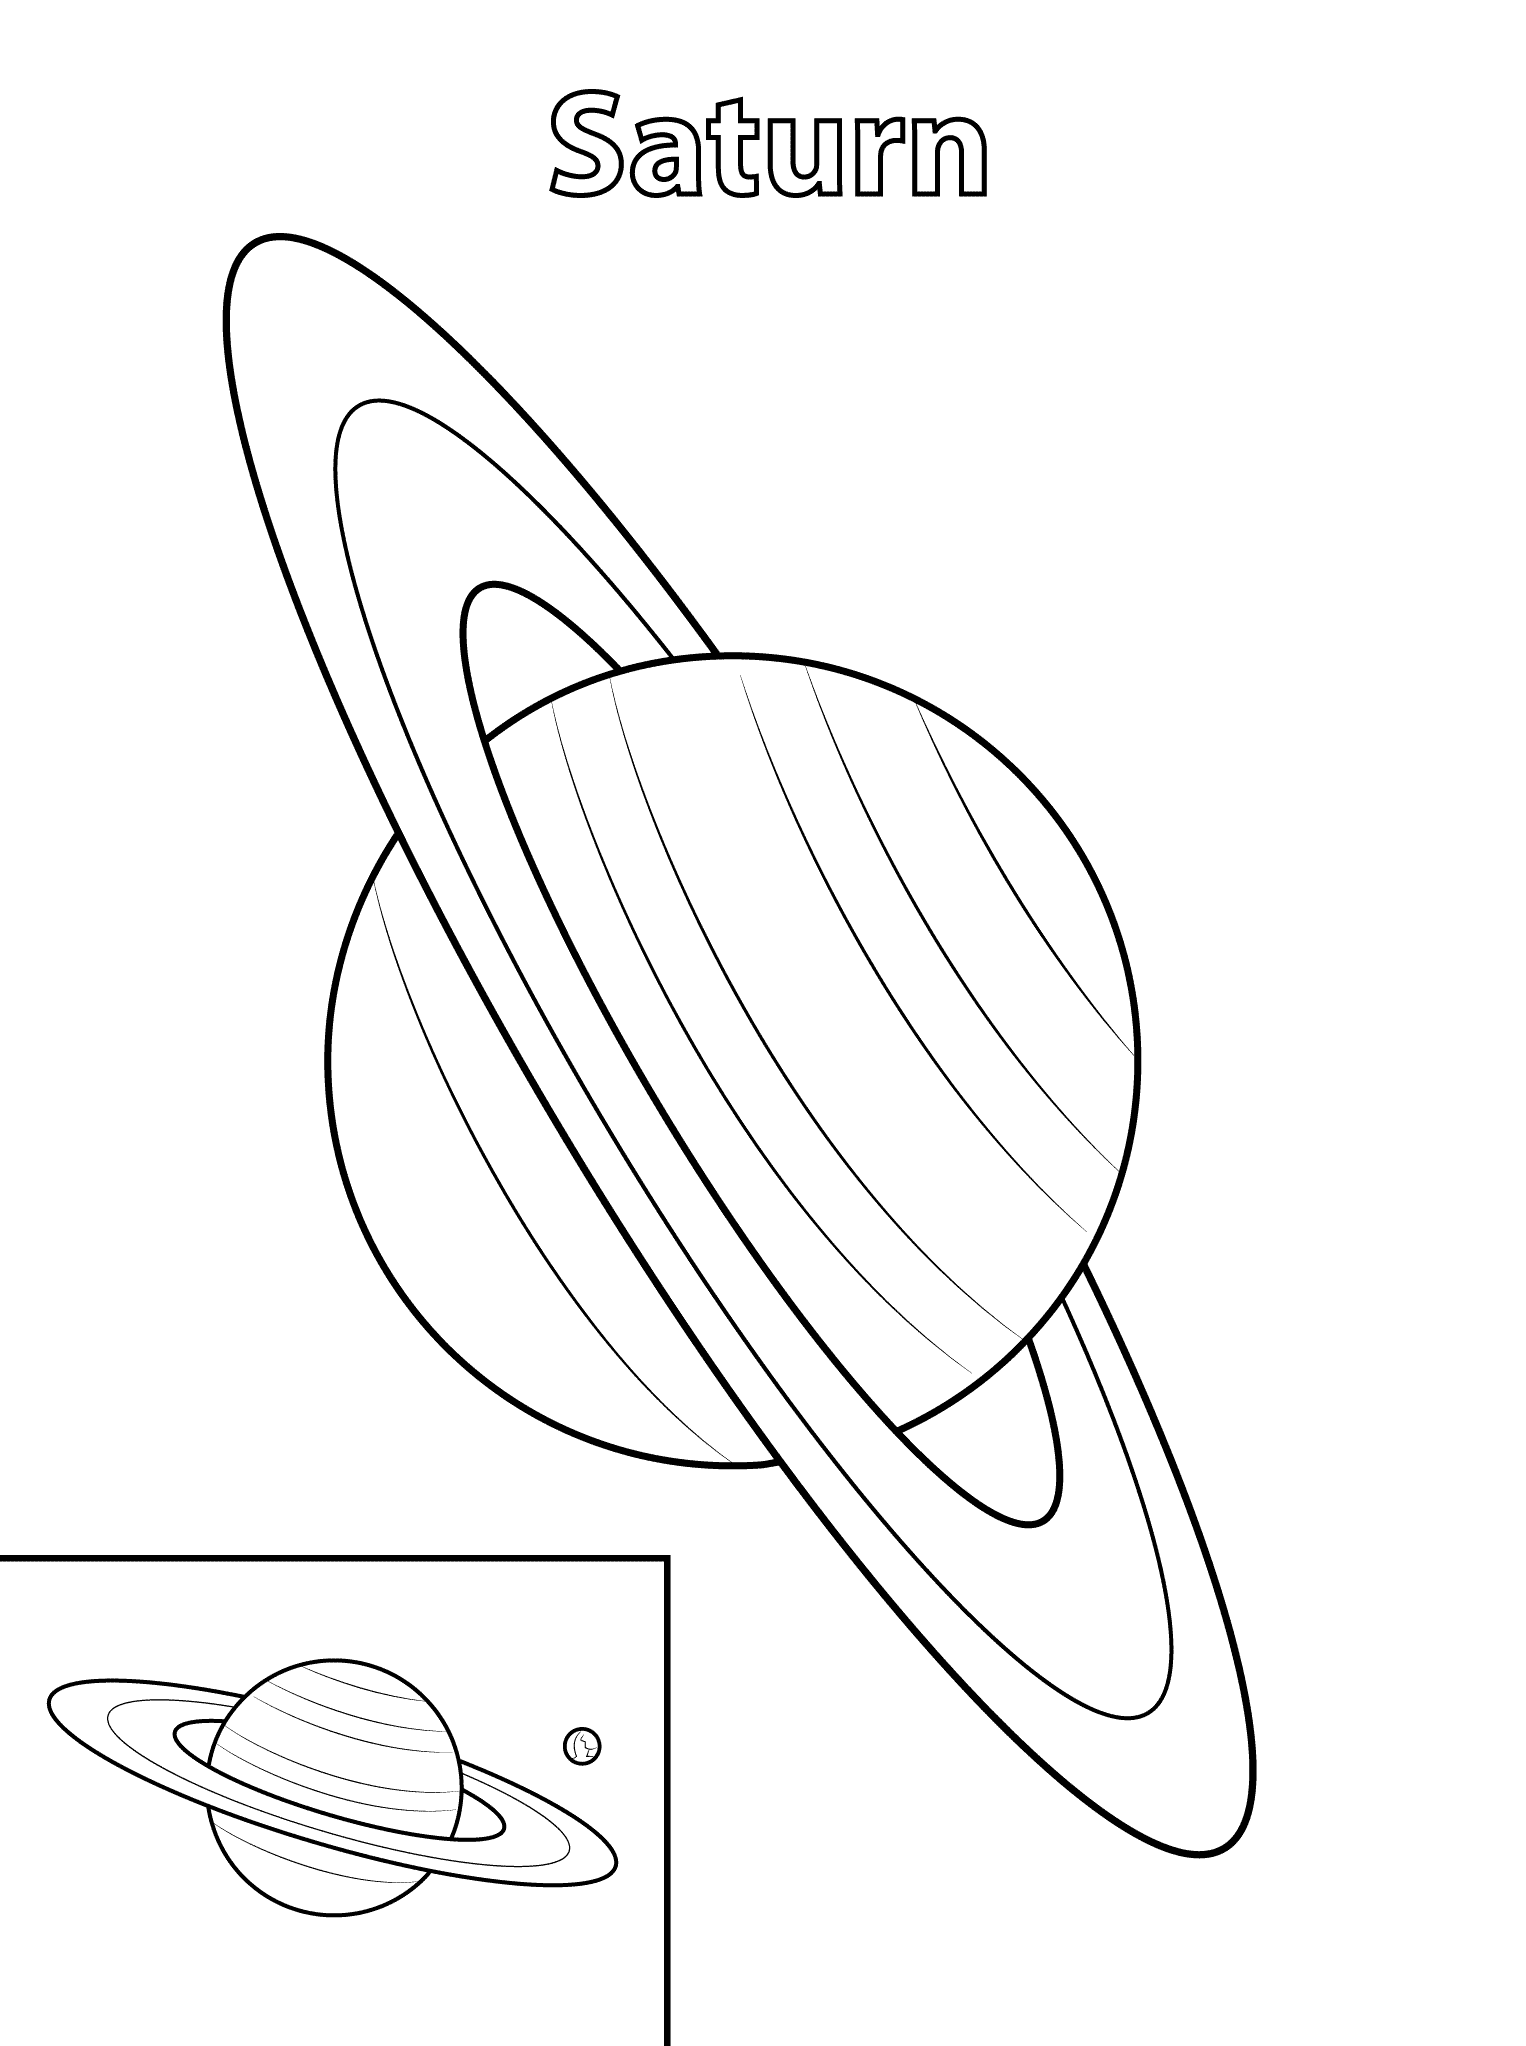 Сатурн раскраска детская